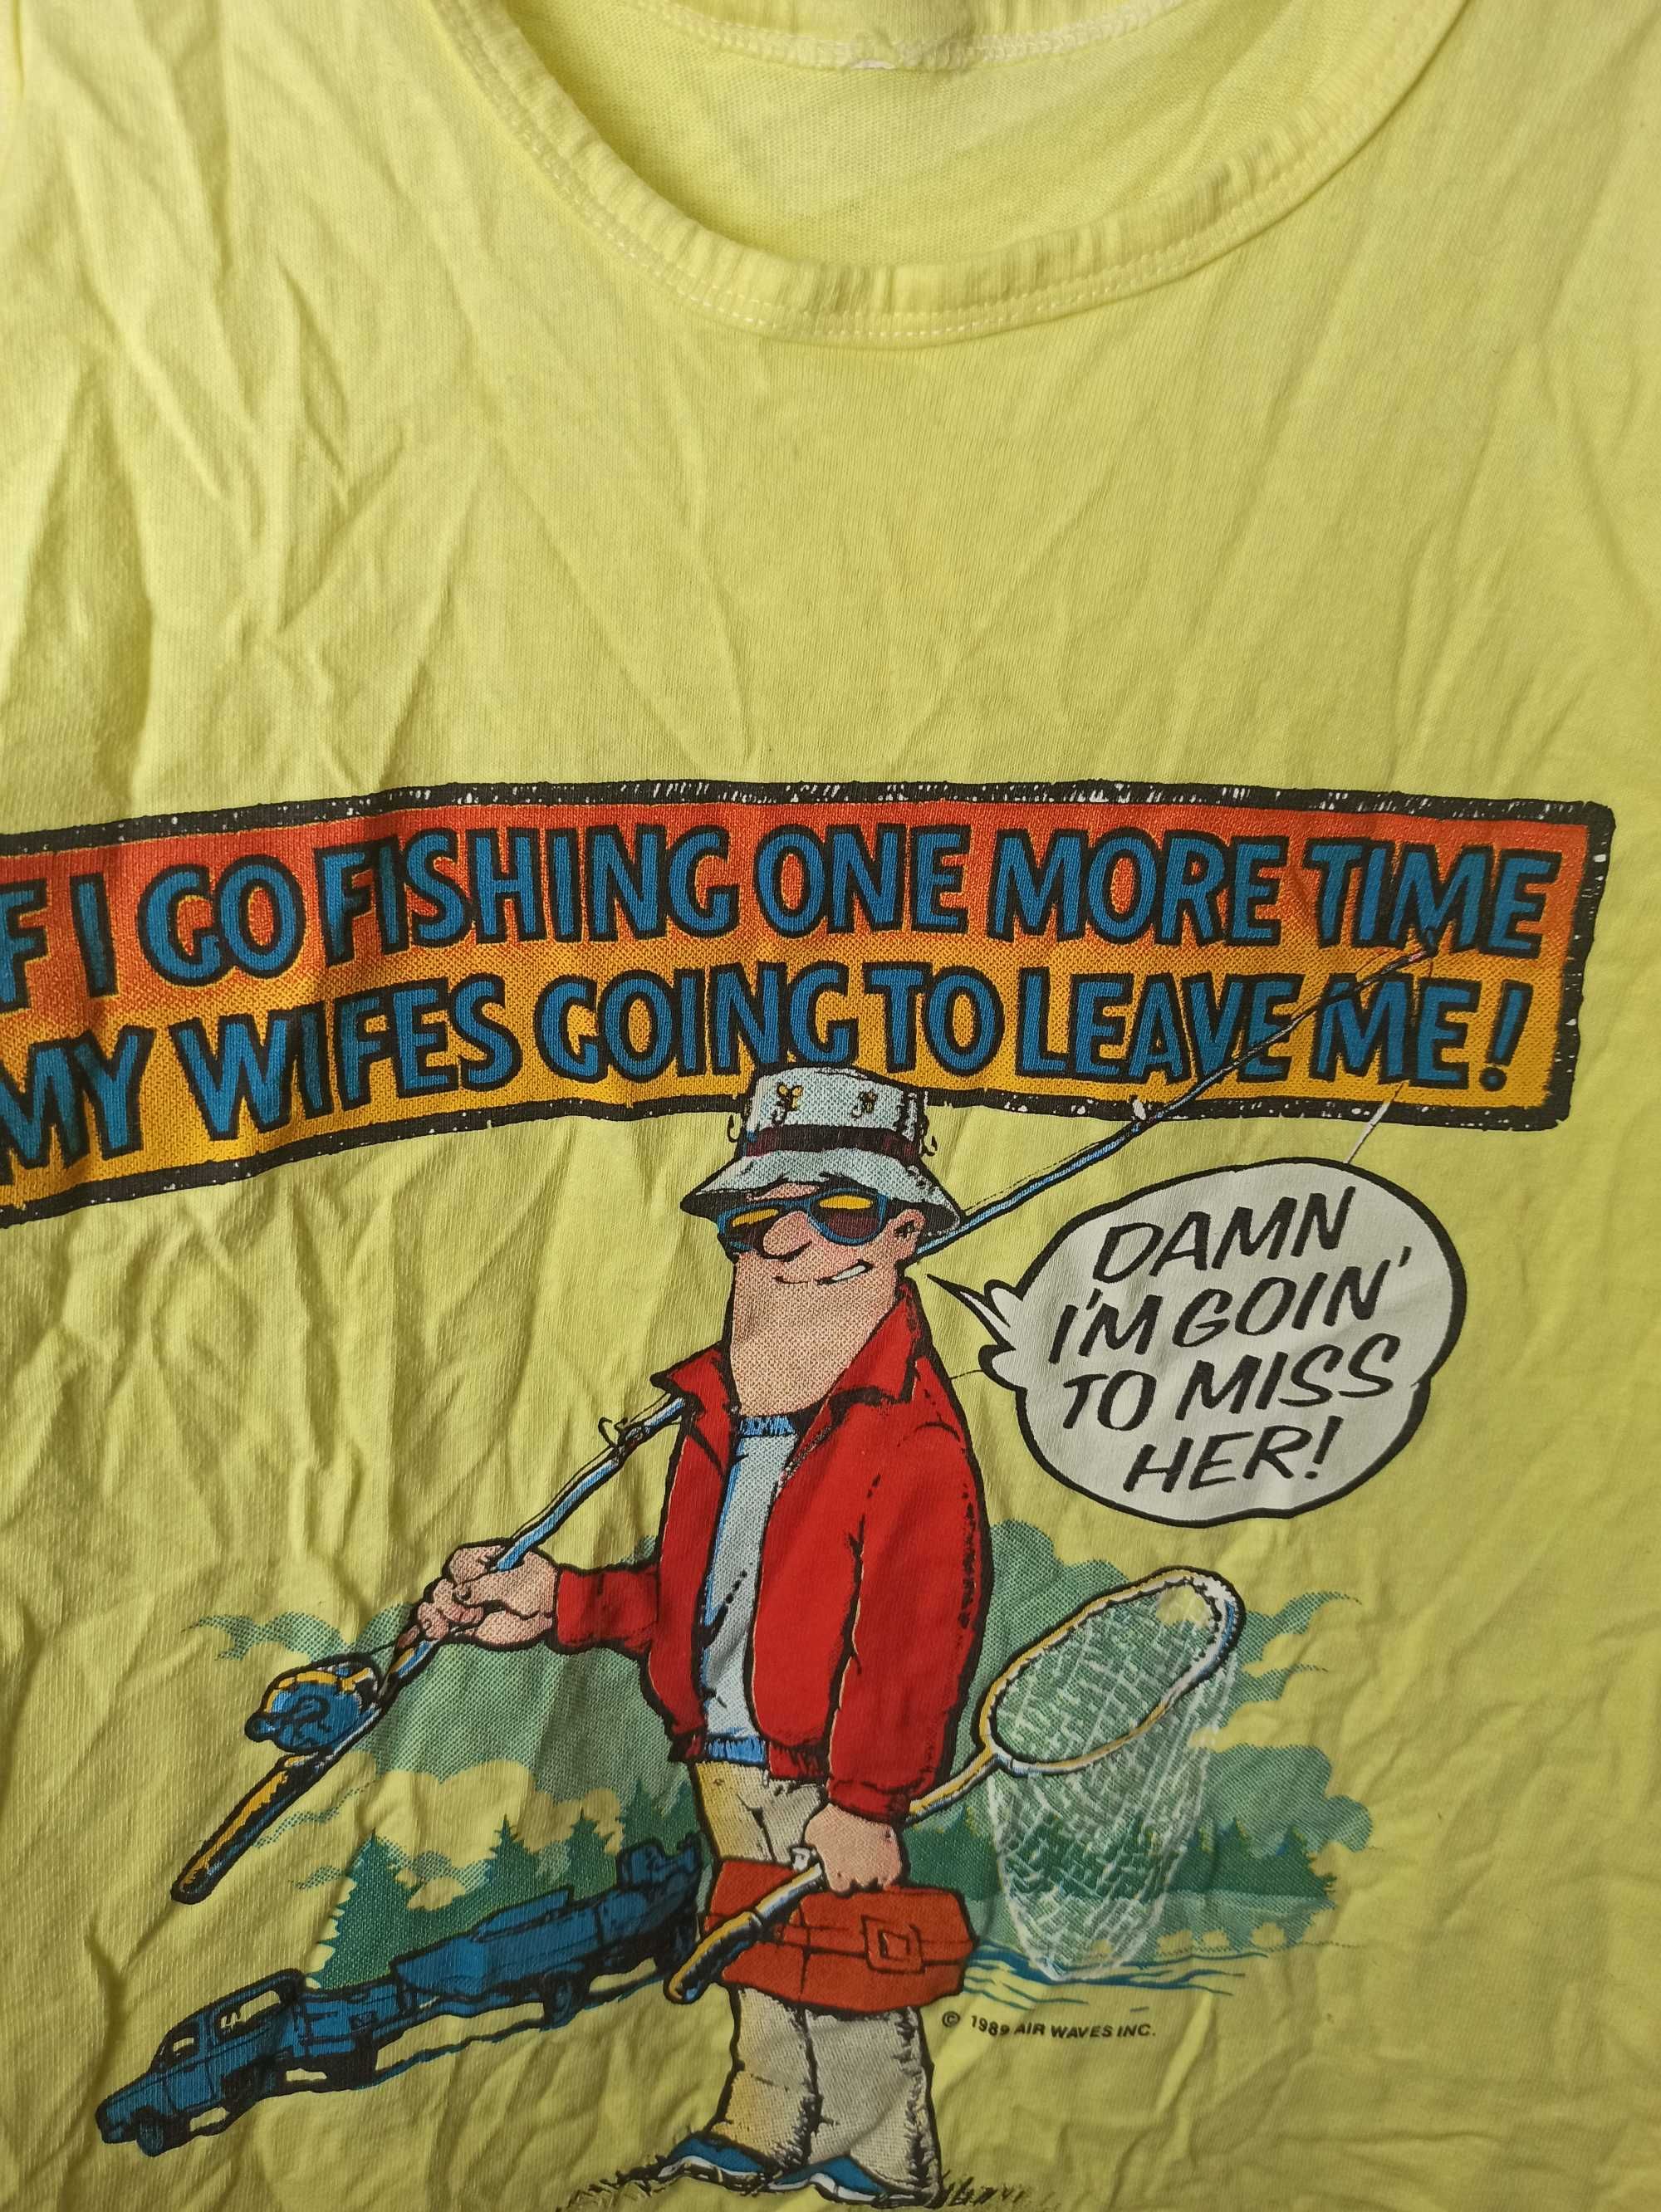 Vintage Fishing Tank Top Funny Meme 80s shirt
koszulka